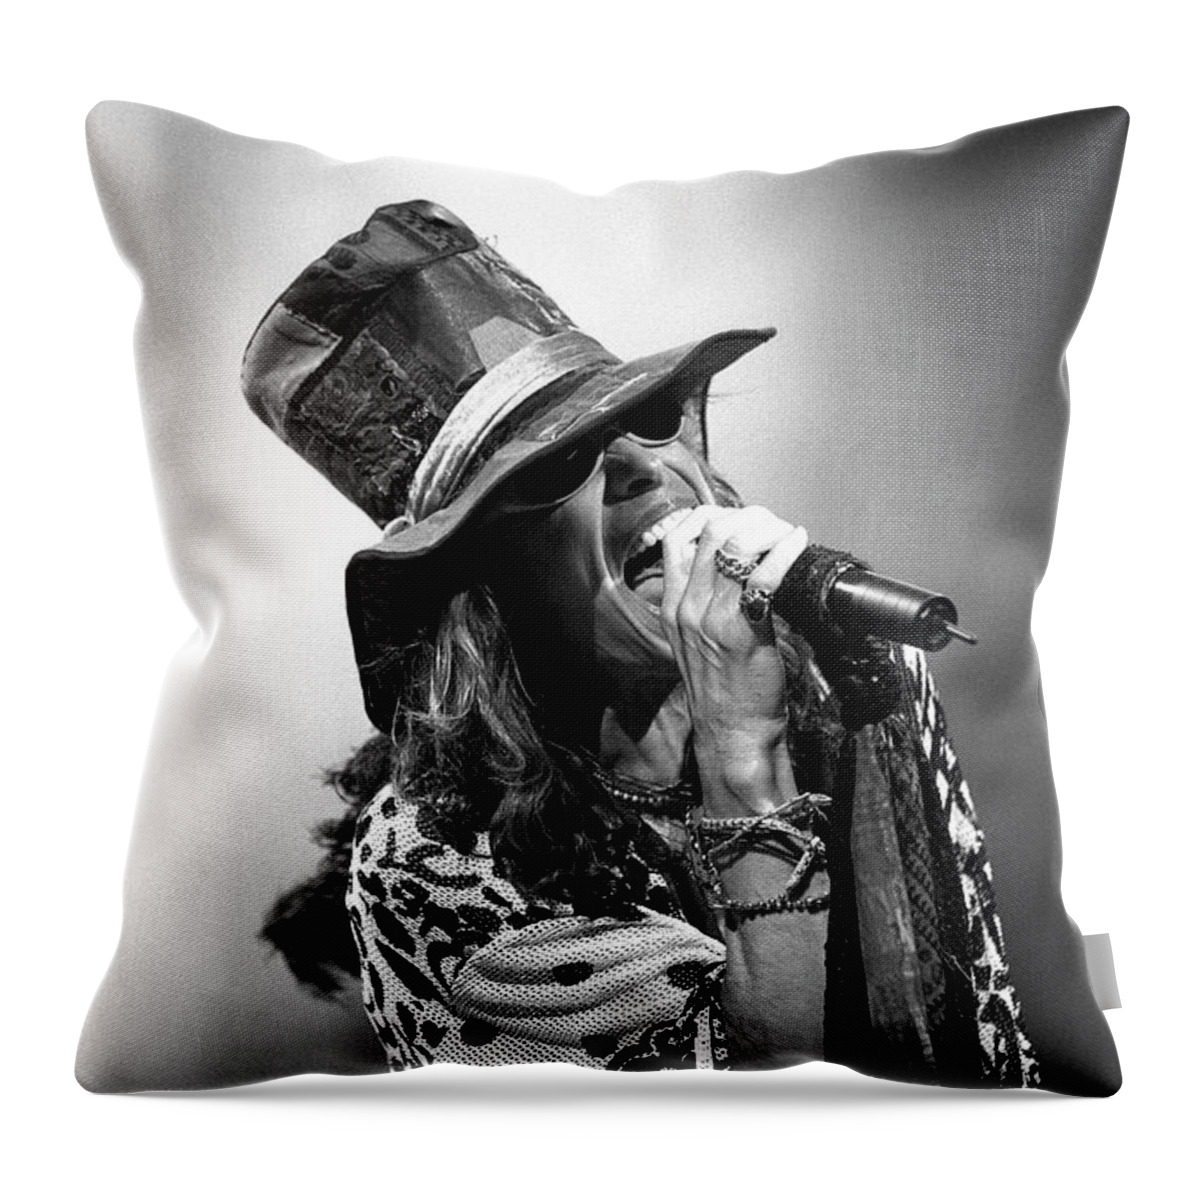 Singing Throw Pillow featuring the photograph Steven Tyler - Aerosmith #38 by Concert Photos